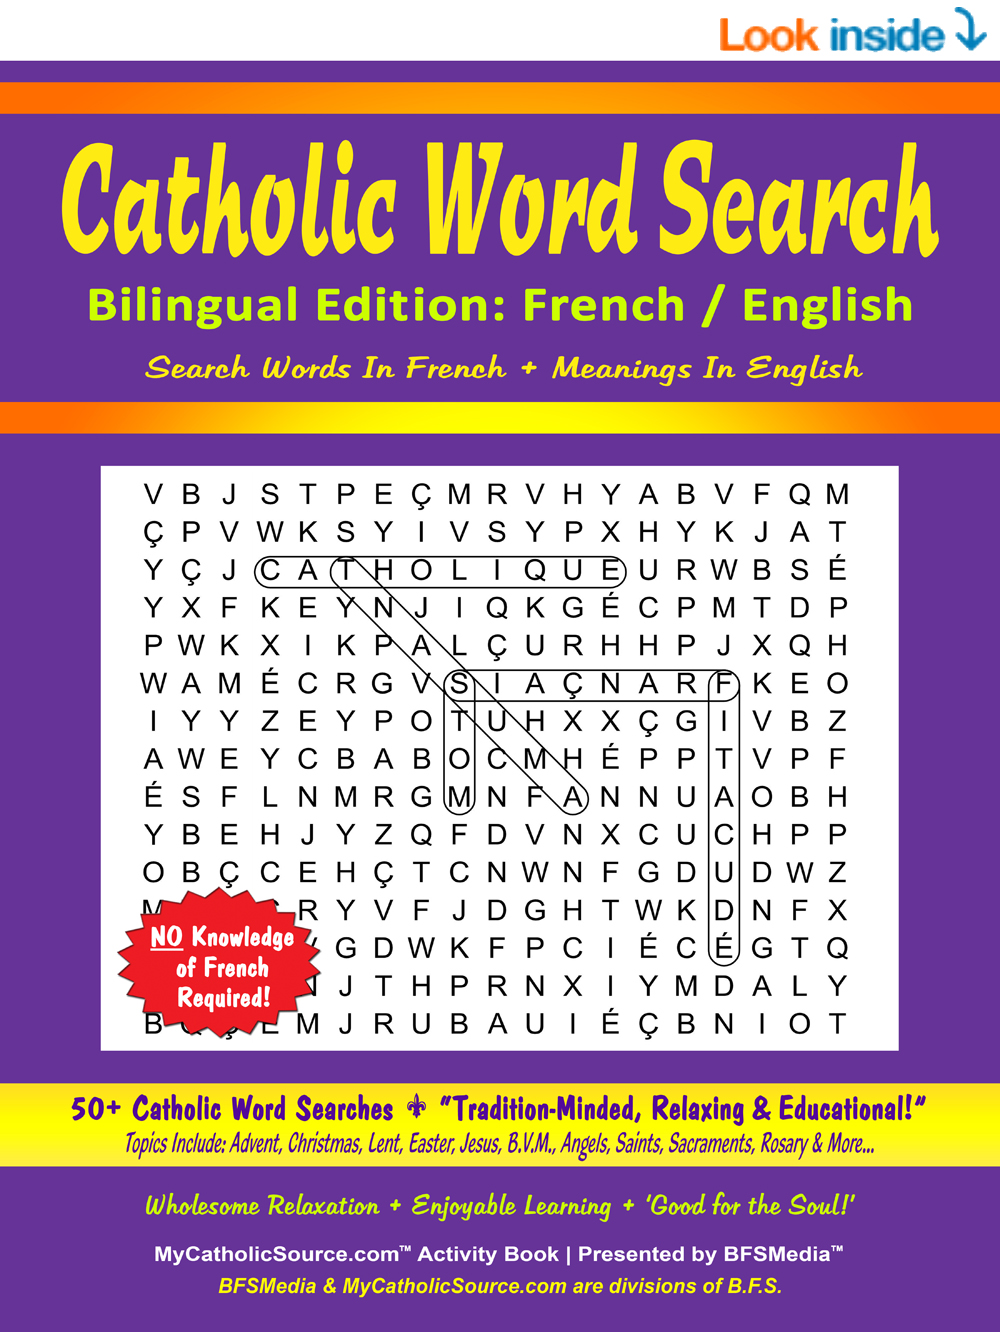 Catholic Word Search - Bilingual Edition: French / English